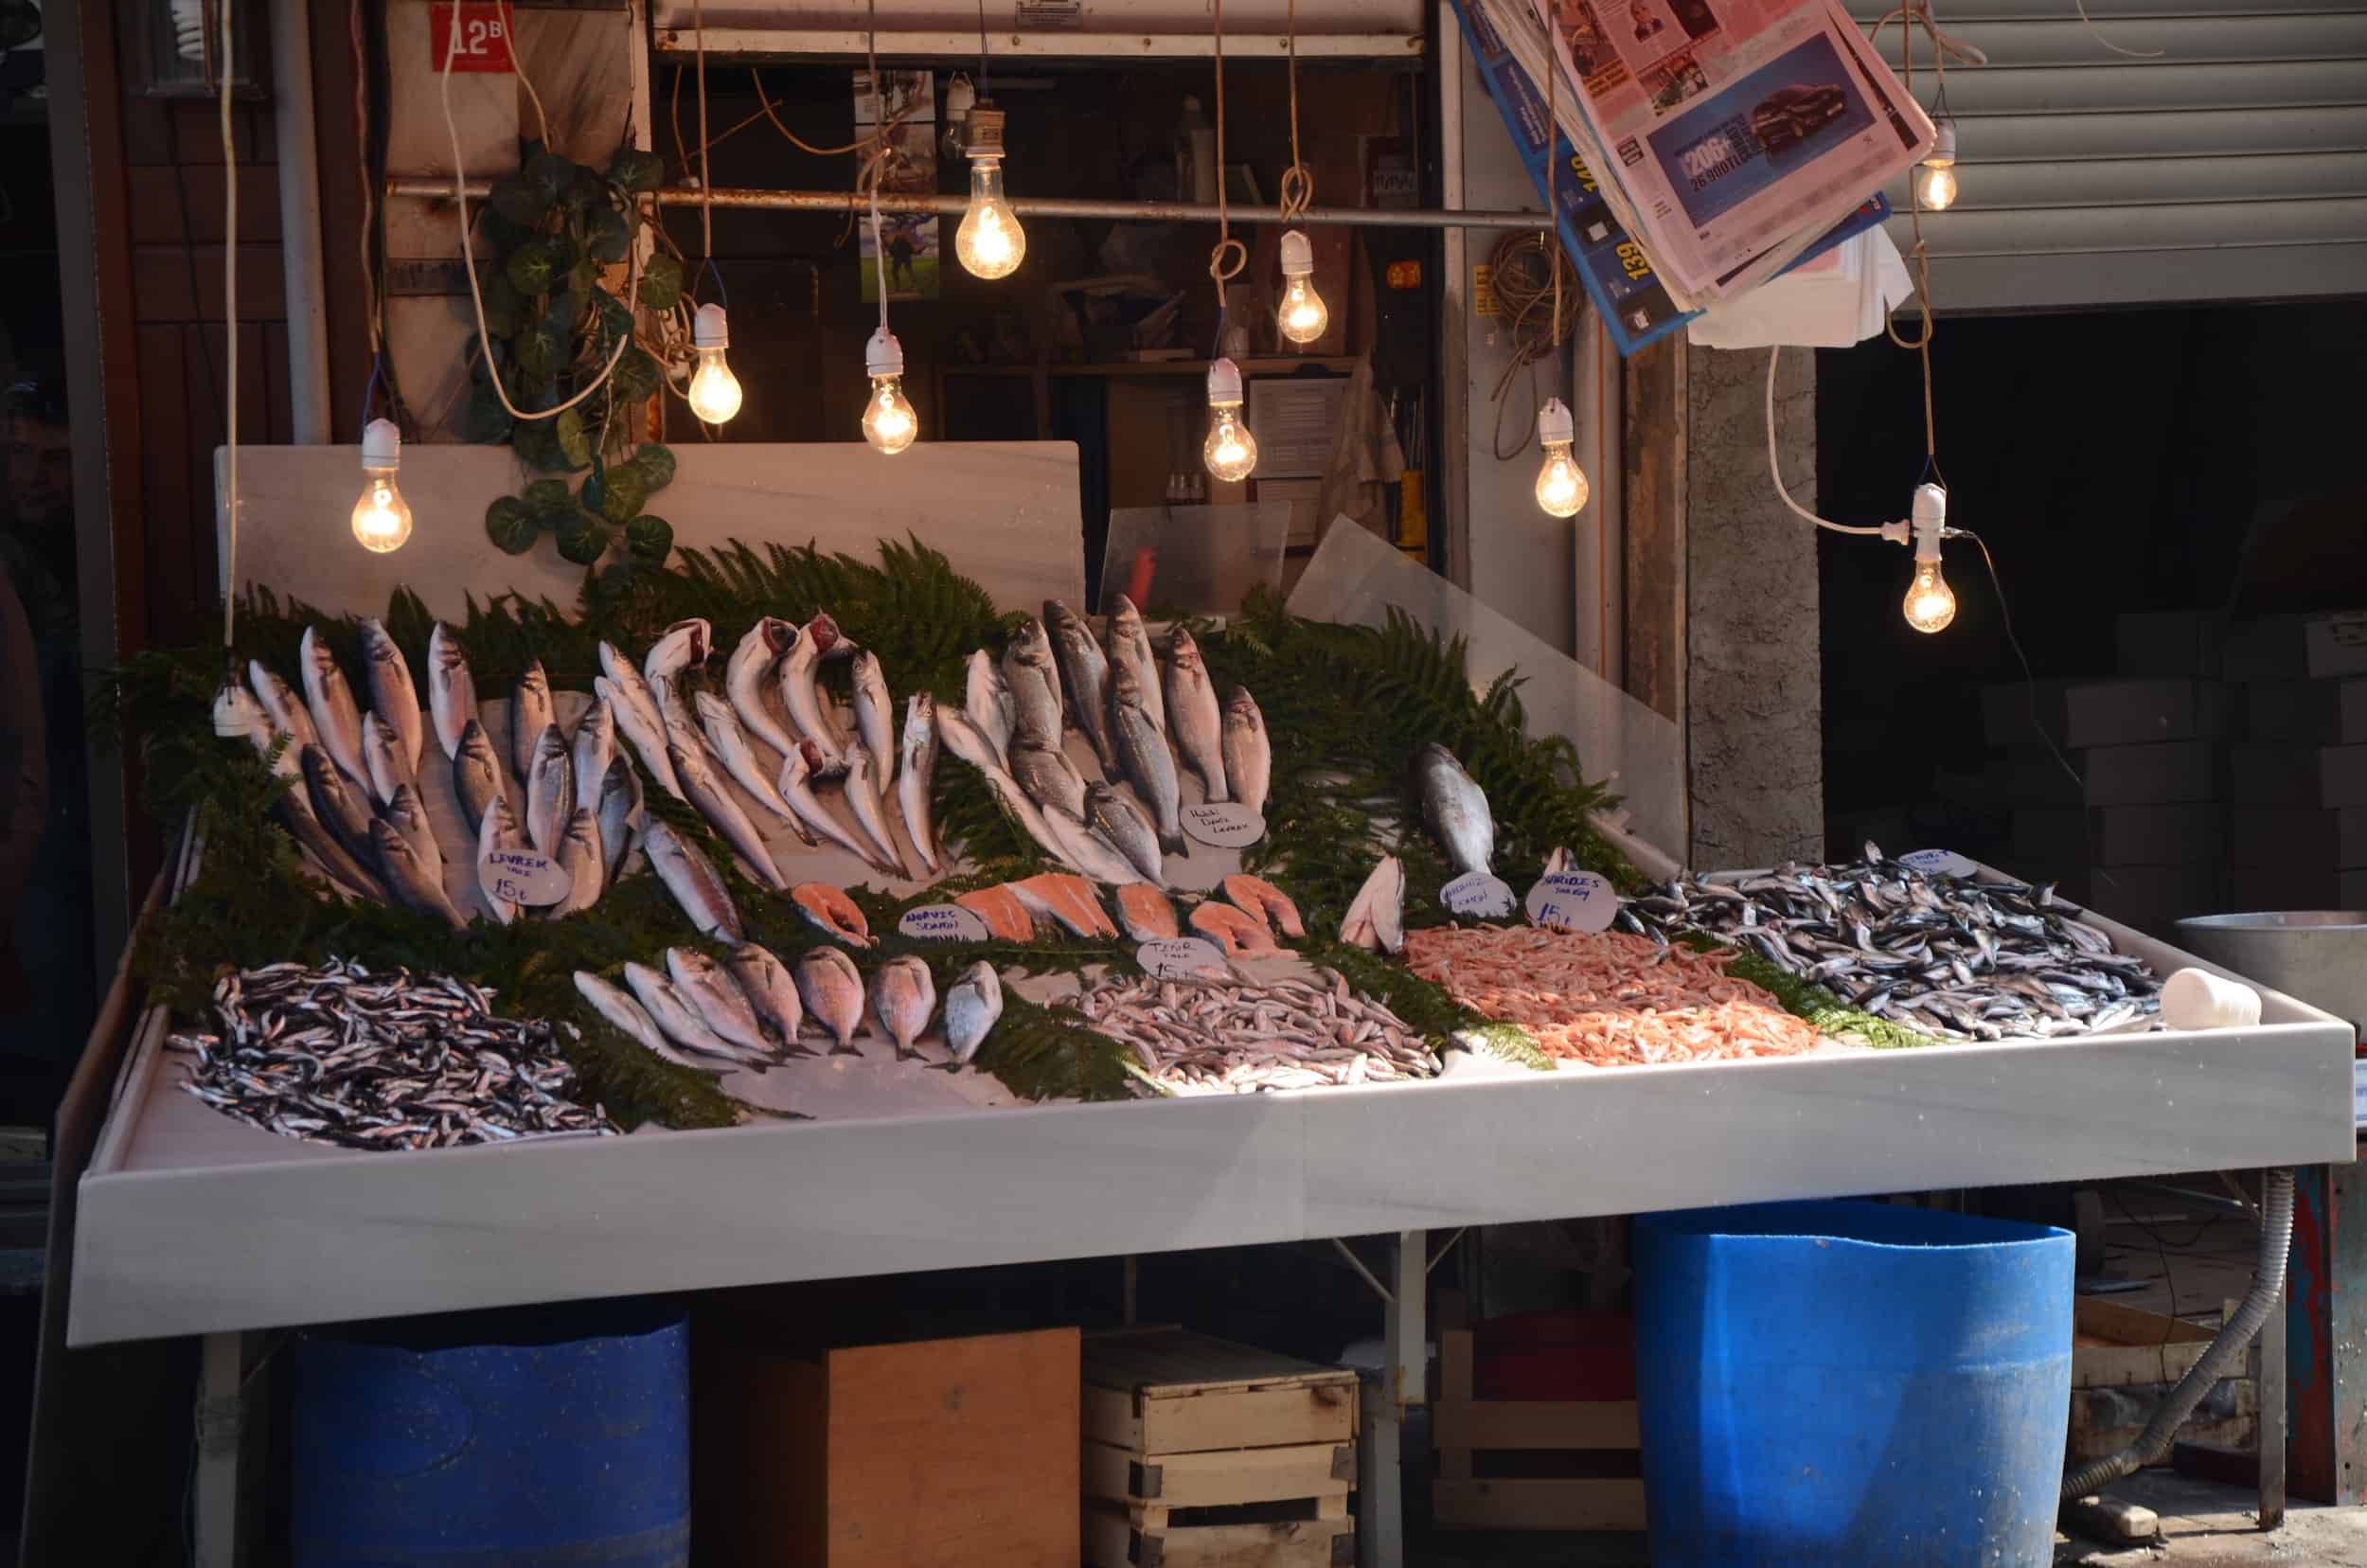 Beşiktaş Fish Market in Çarşı, Beşiktaş, Istanbul, Turkey